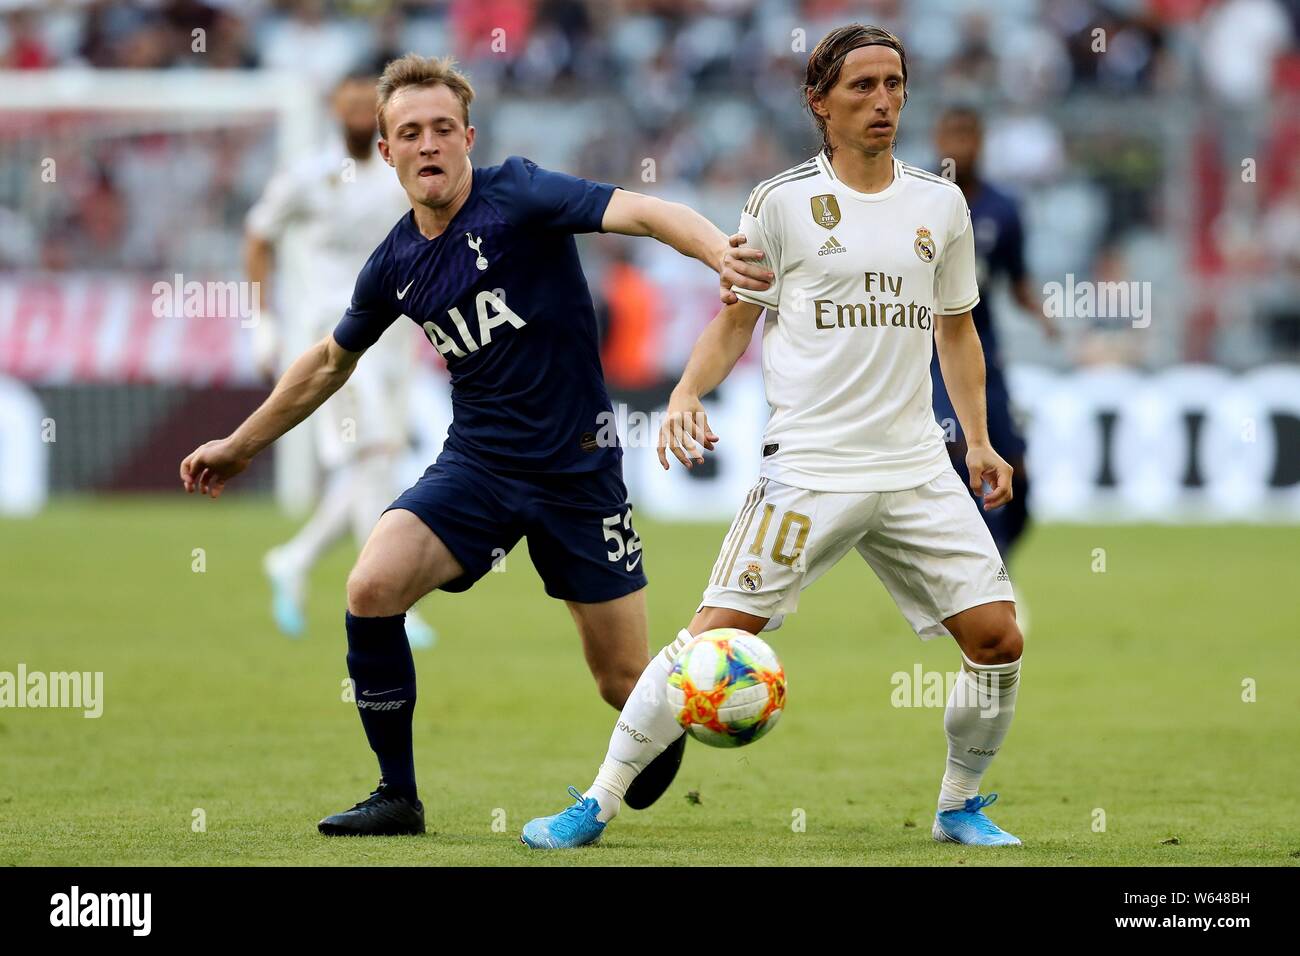 Spurs snub Real Madrid's 'final' €30m Luka Modric offer, Football News